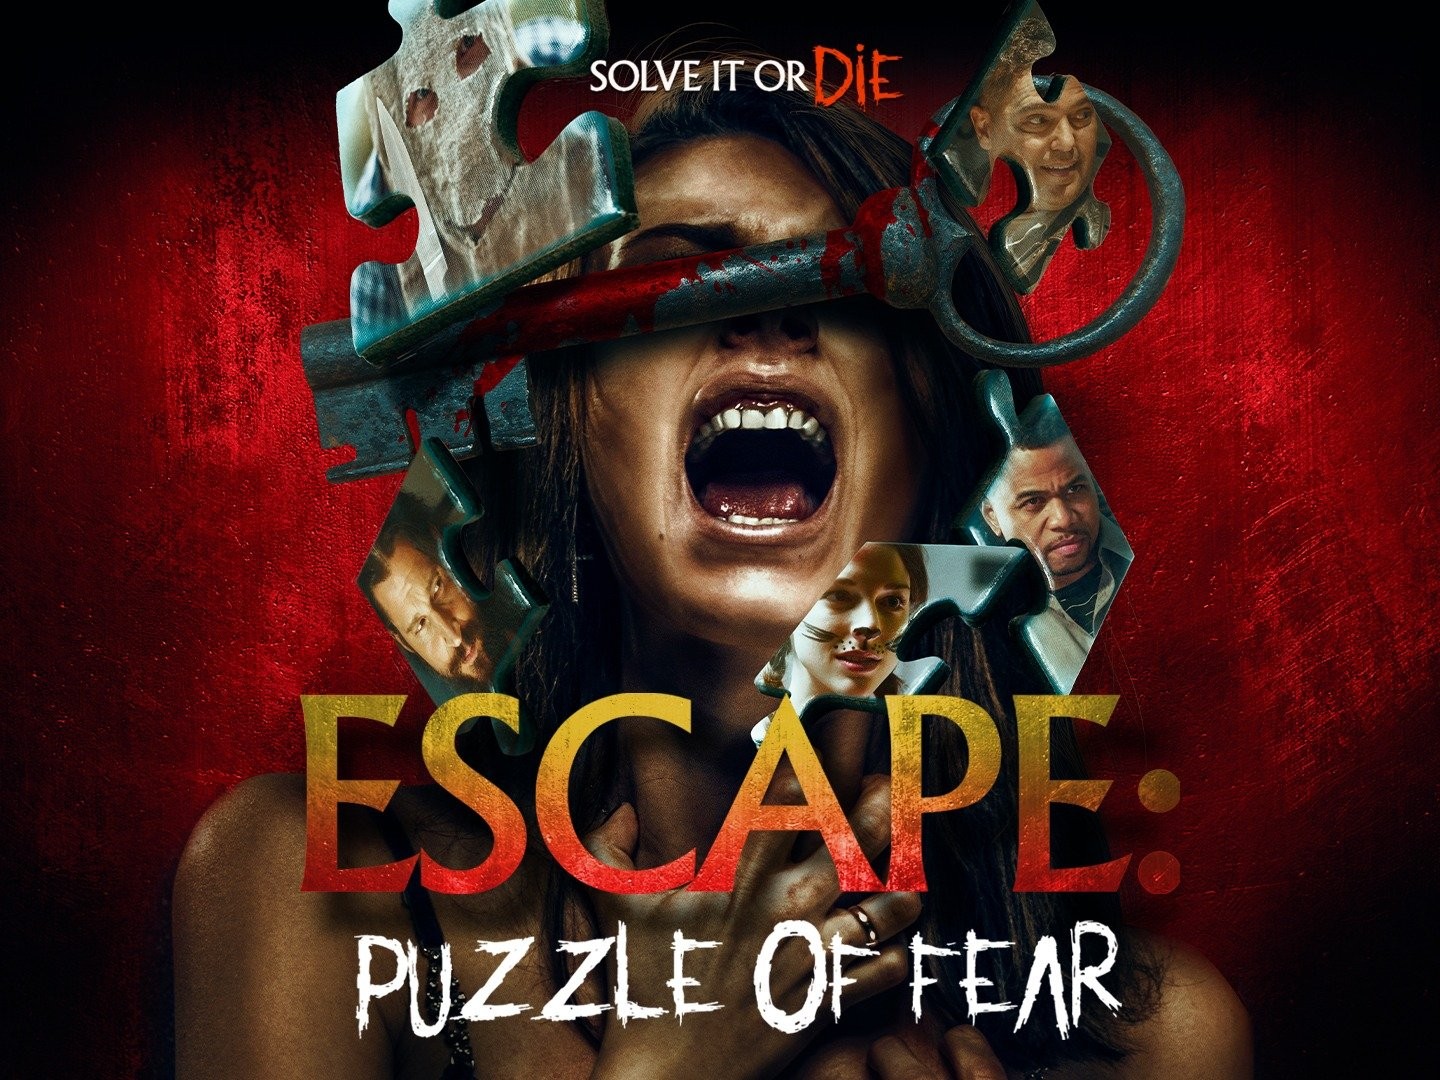 Escape puzzle of fear